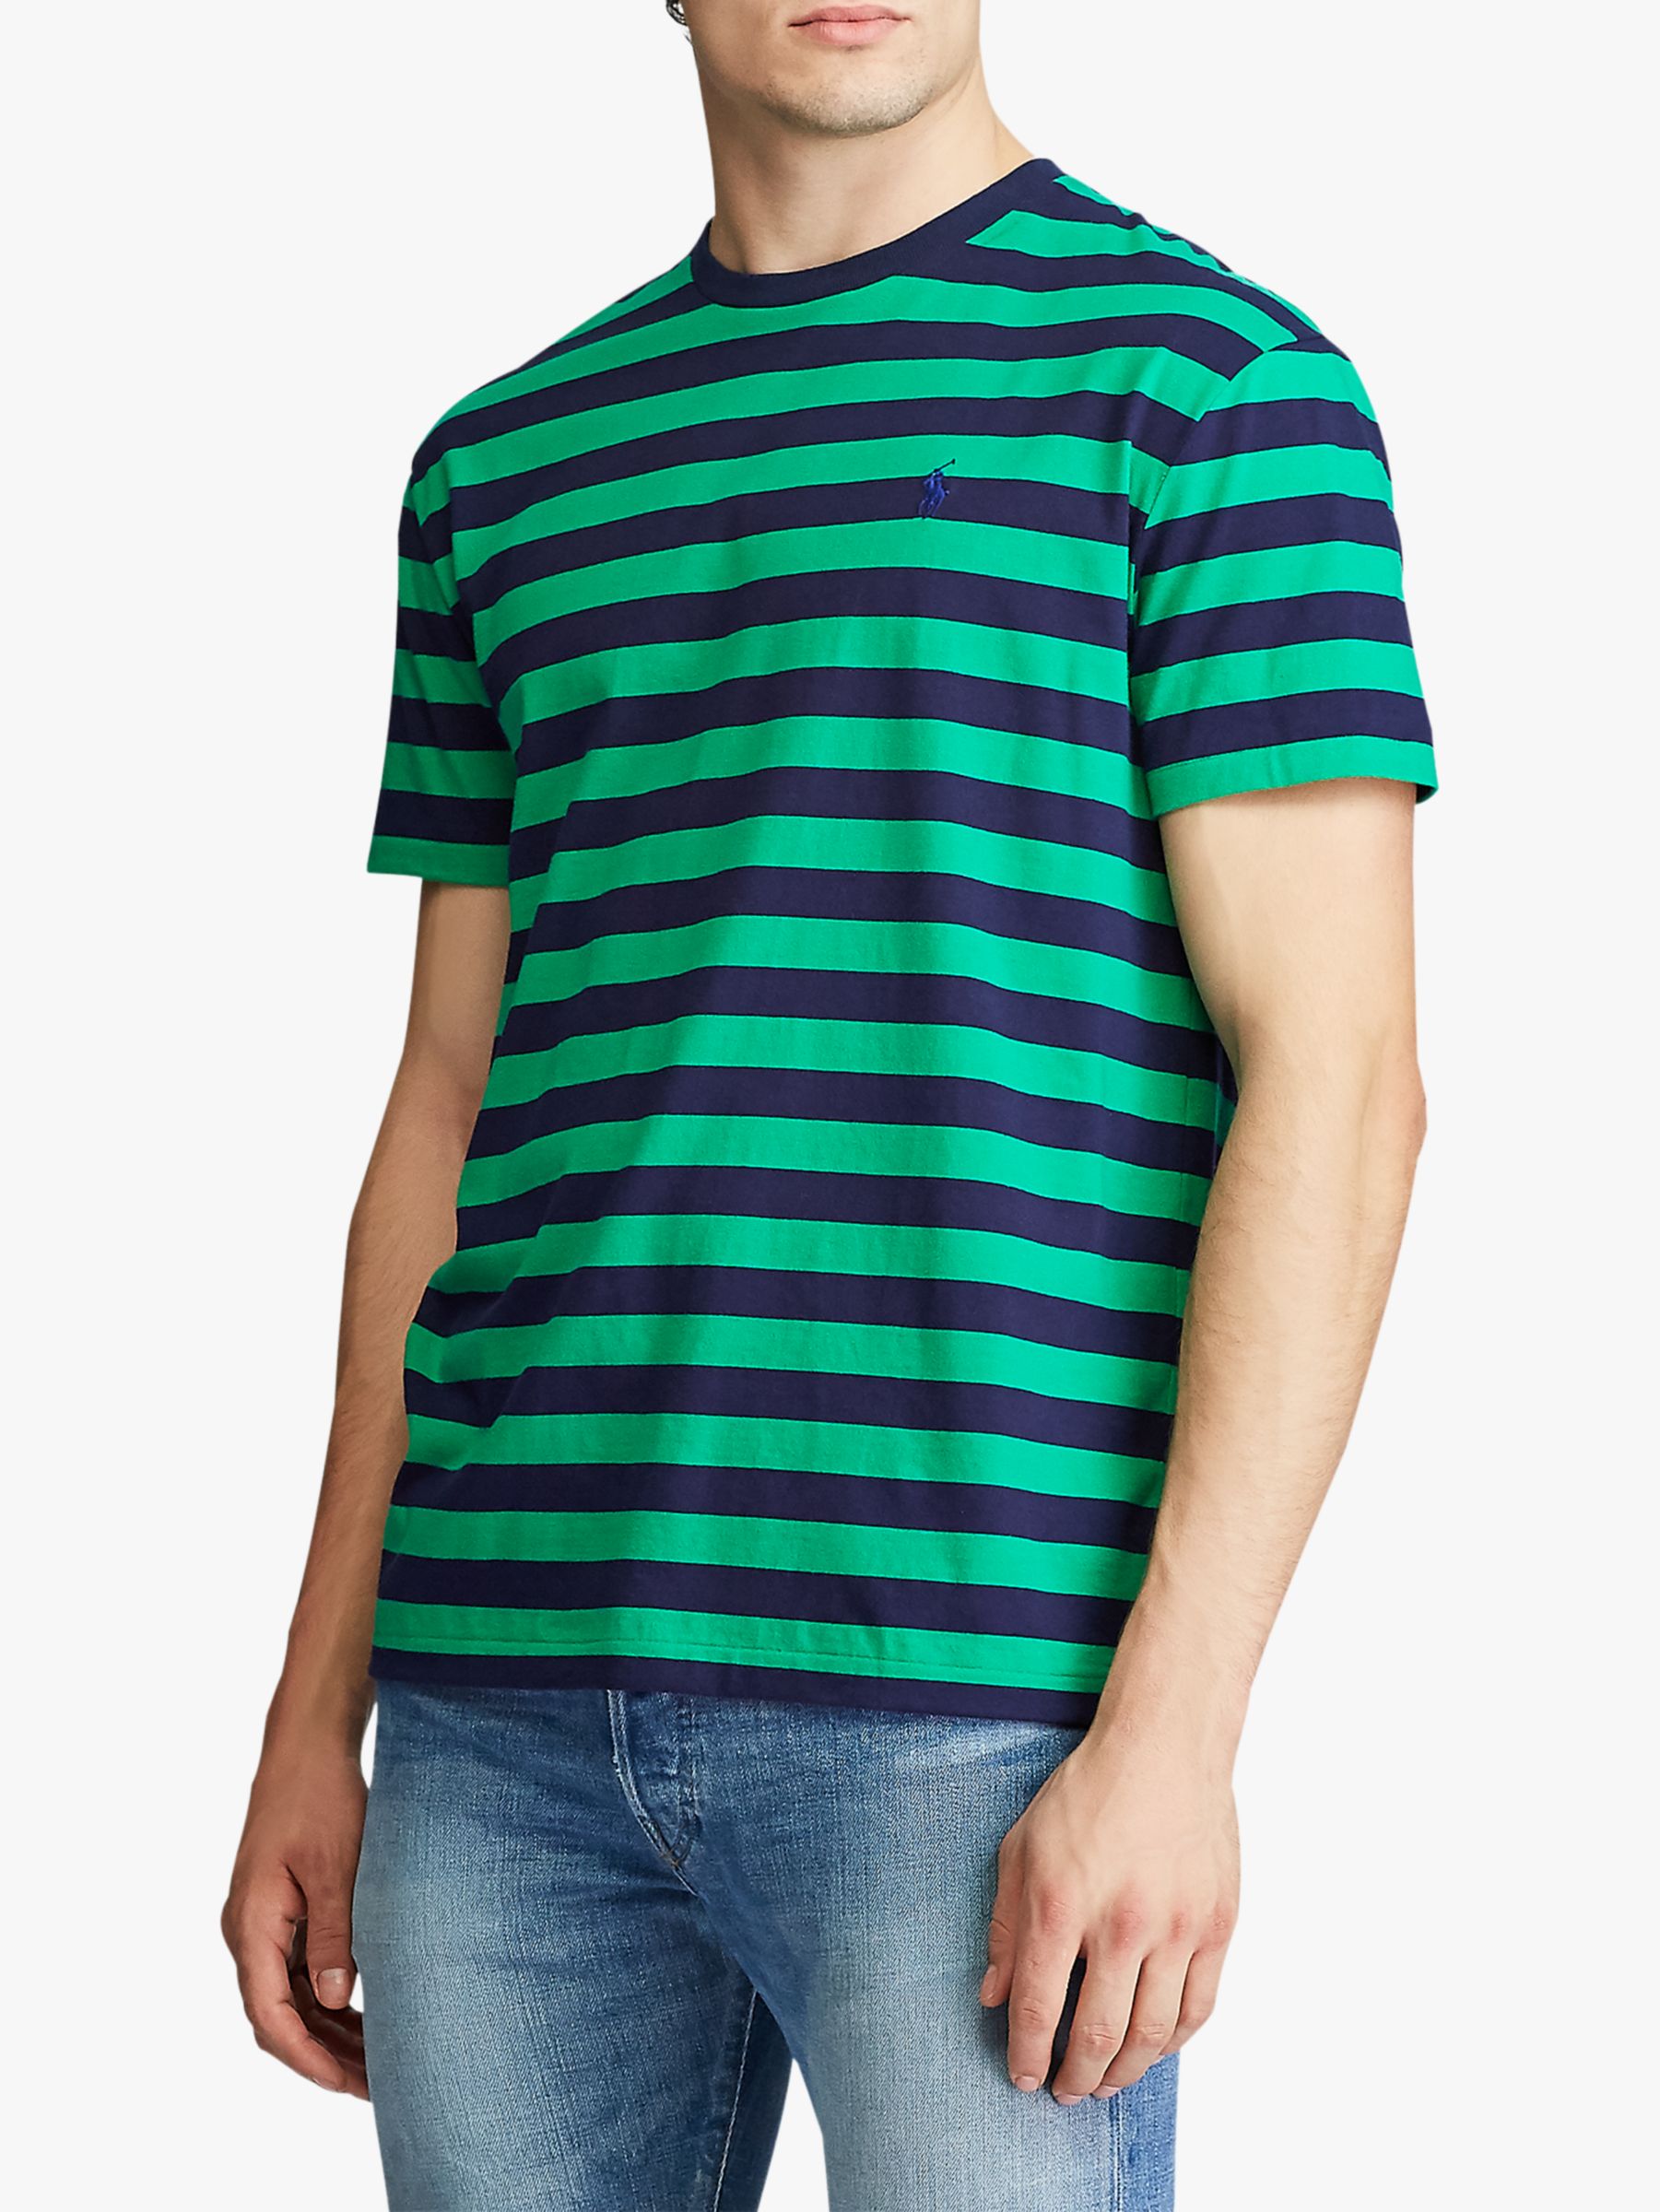 Polo Ralph Lauren Striped T-Shirt, Green/French Navy